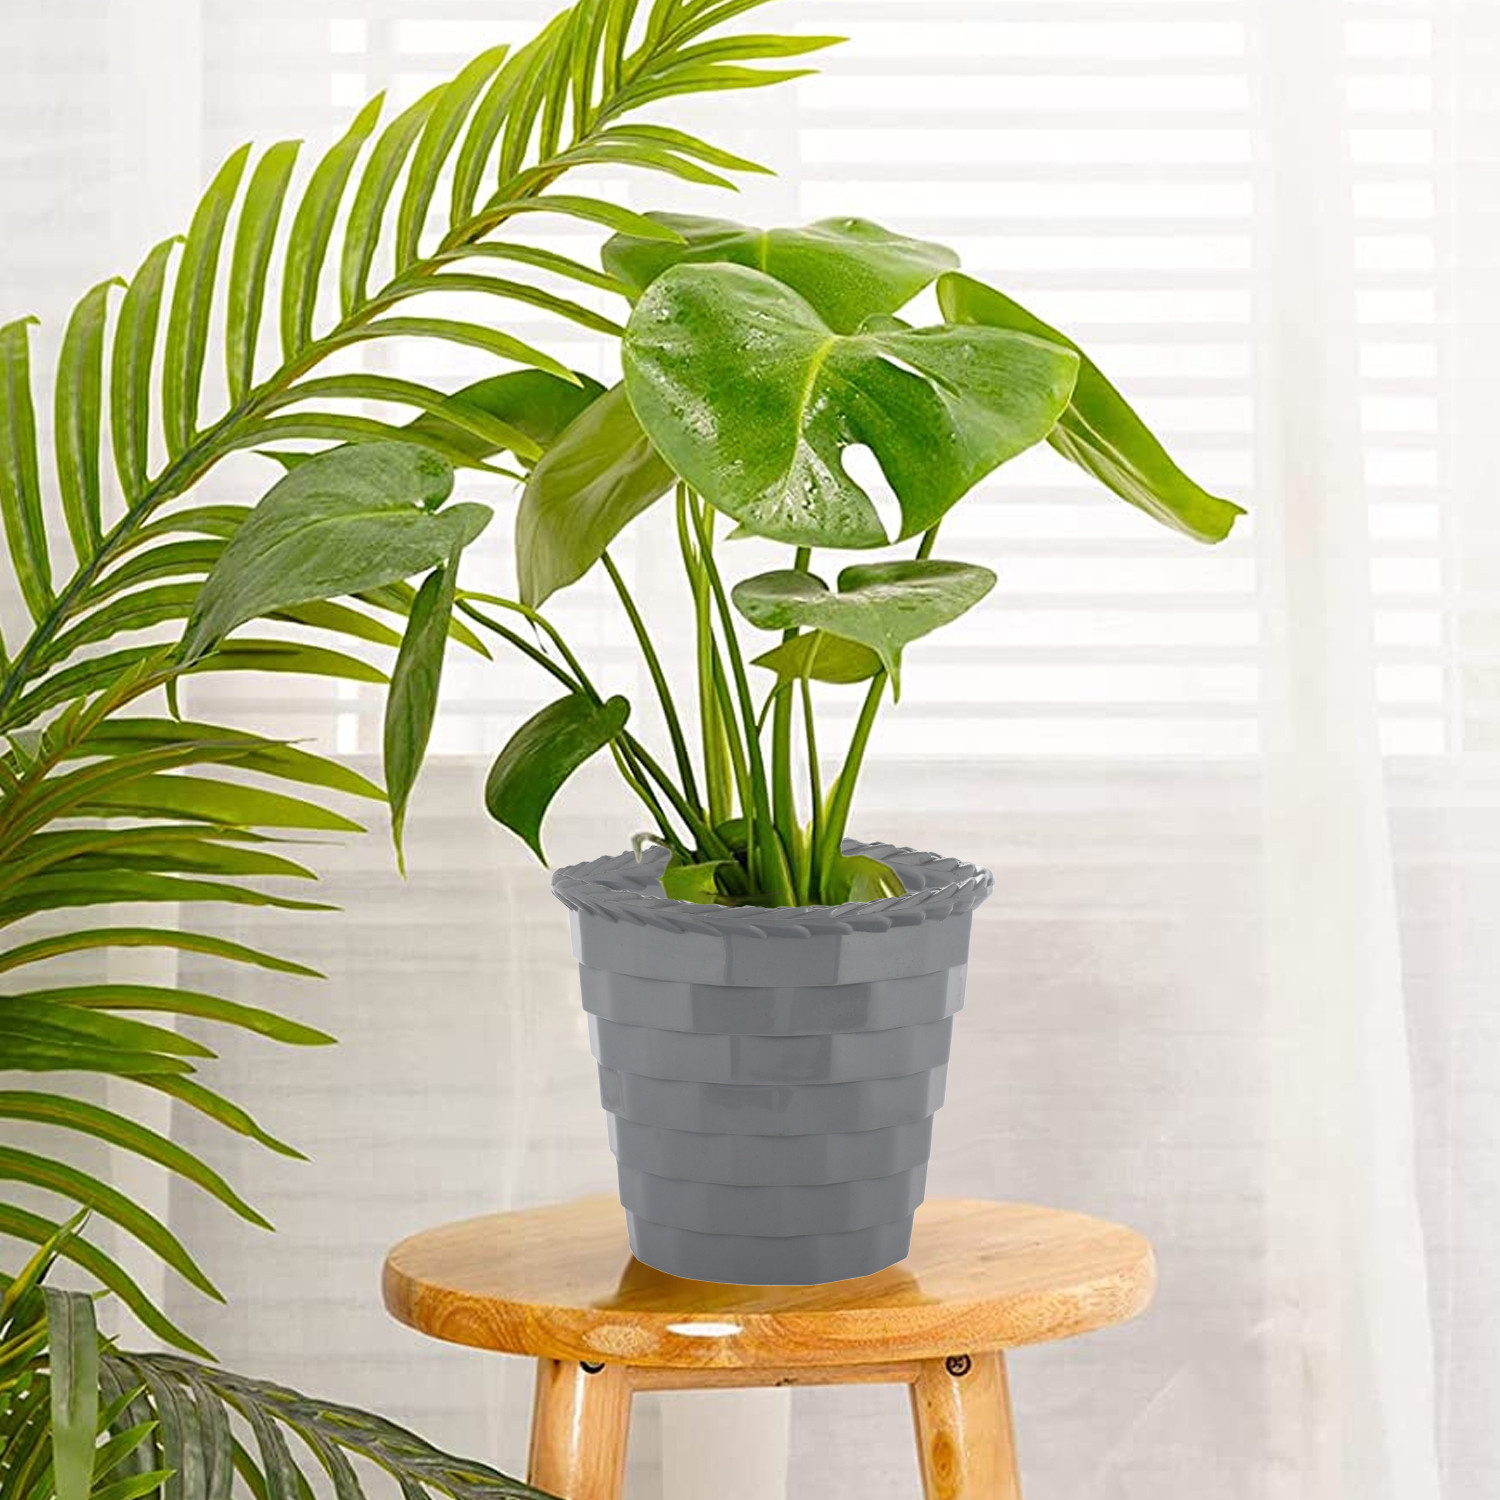 Kuber Industries Brick Flower Pot|Durable Plastic Flower Pots|Planters for Home Décor|Garden|Living Room|Balcony|6 Inch|Pack of 4 (Multicolor)